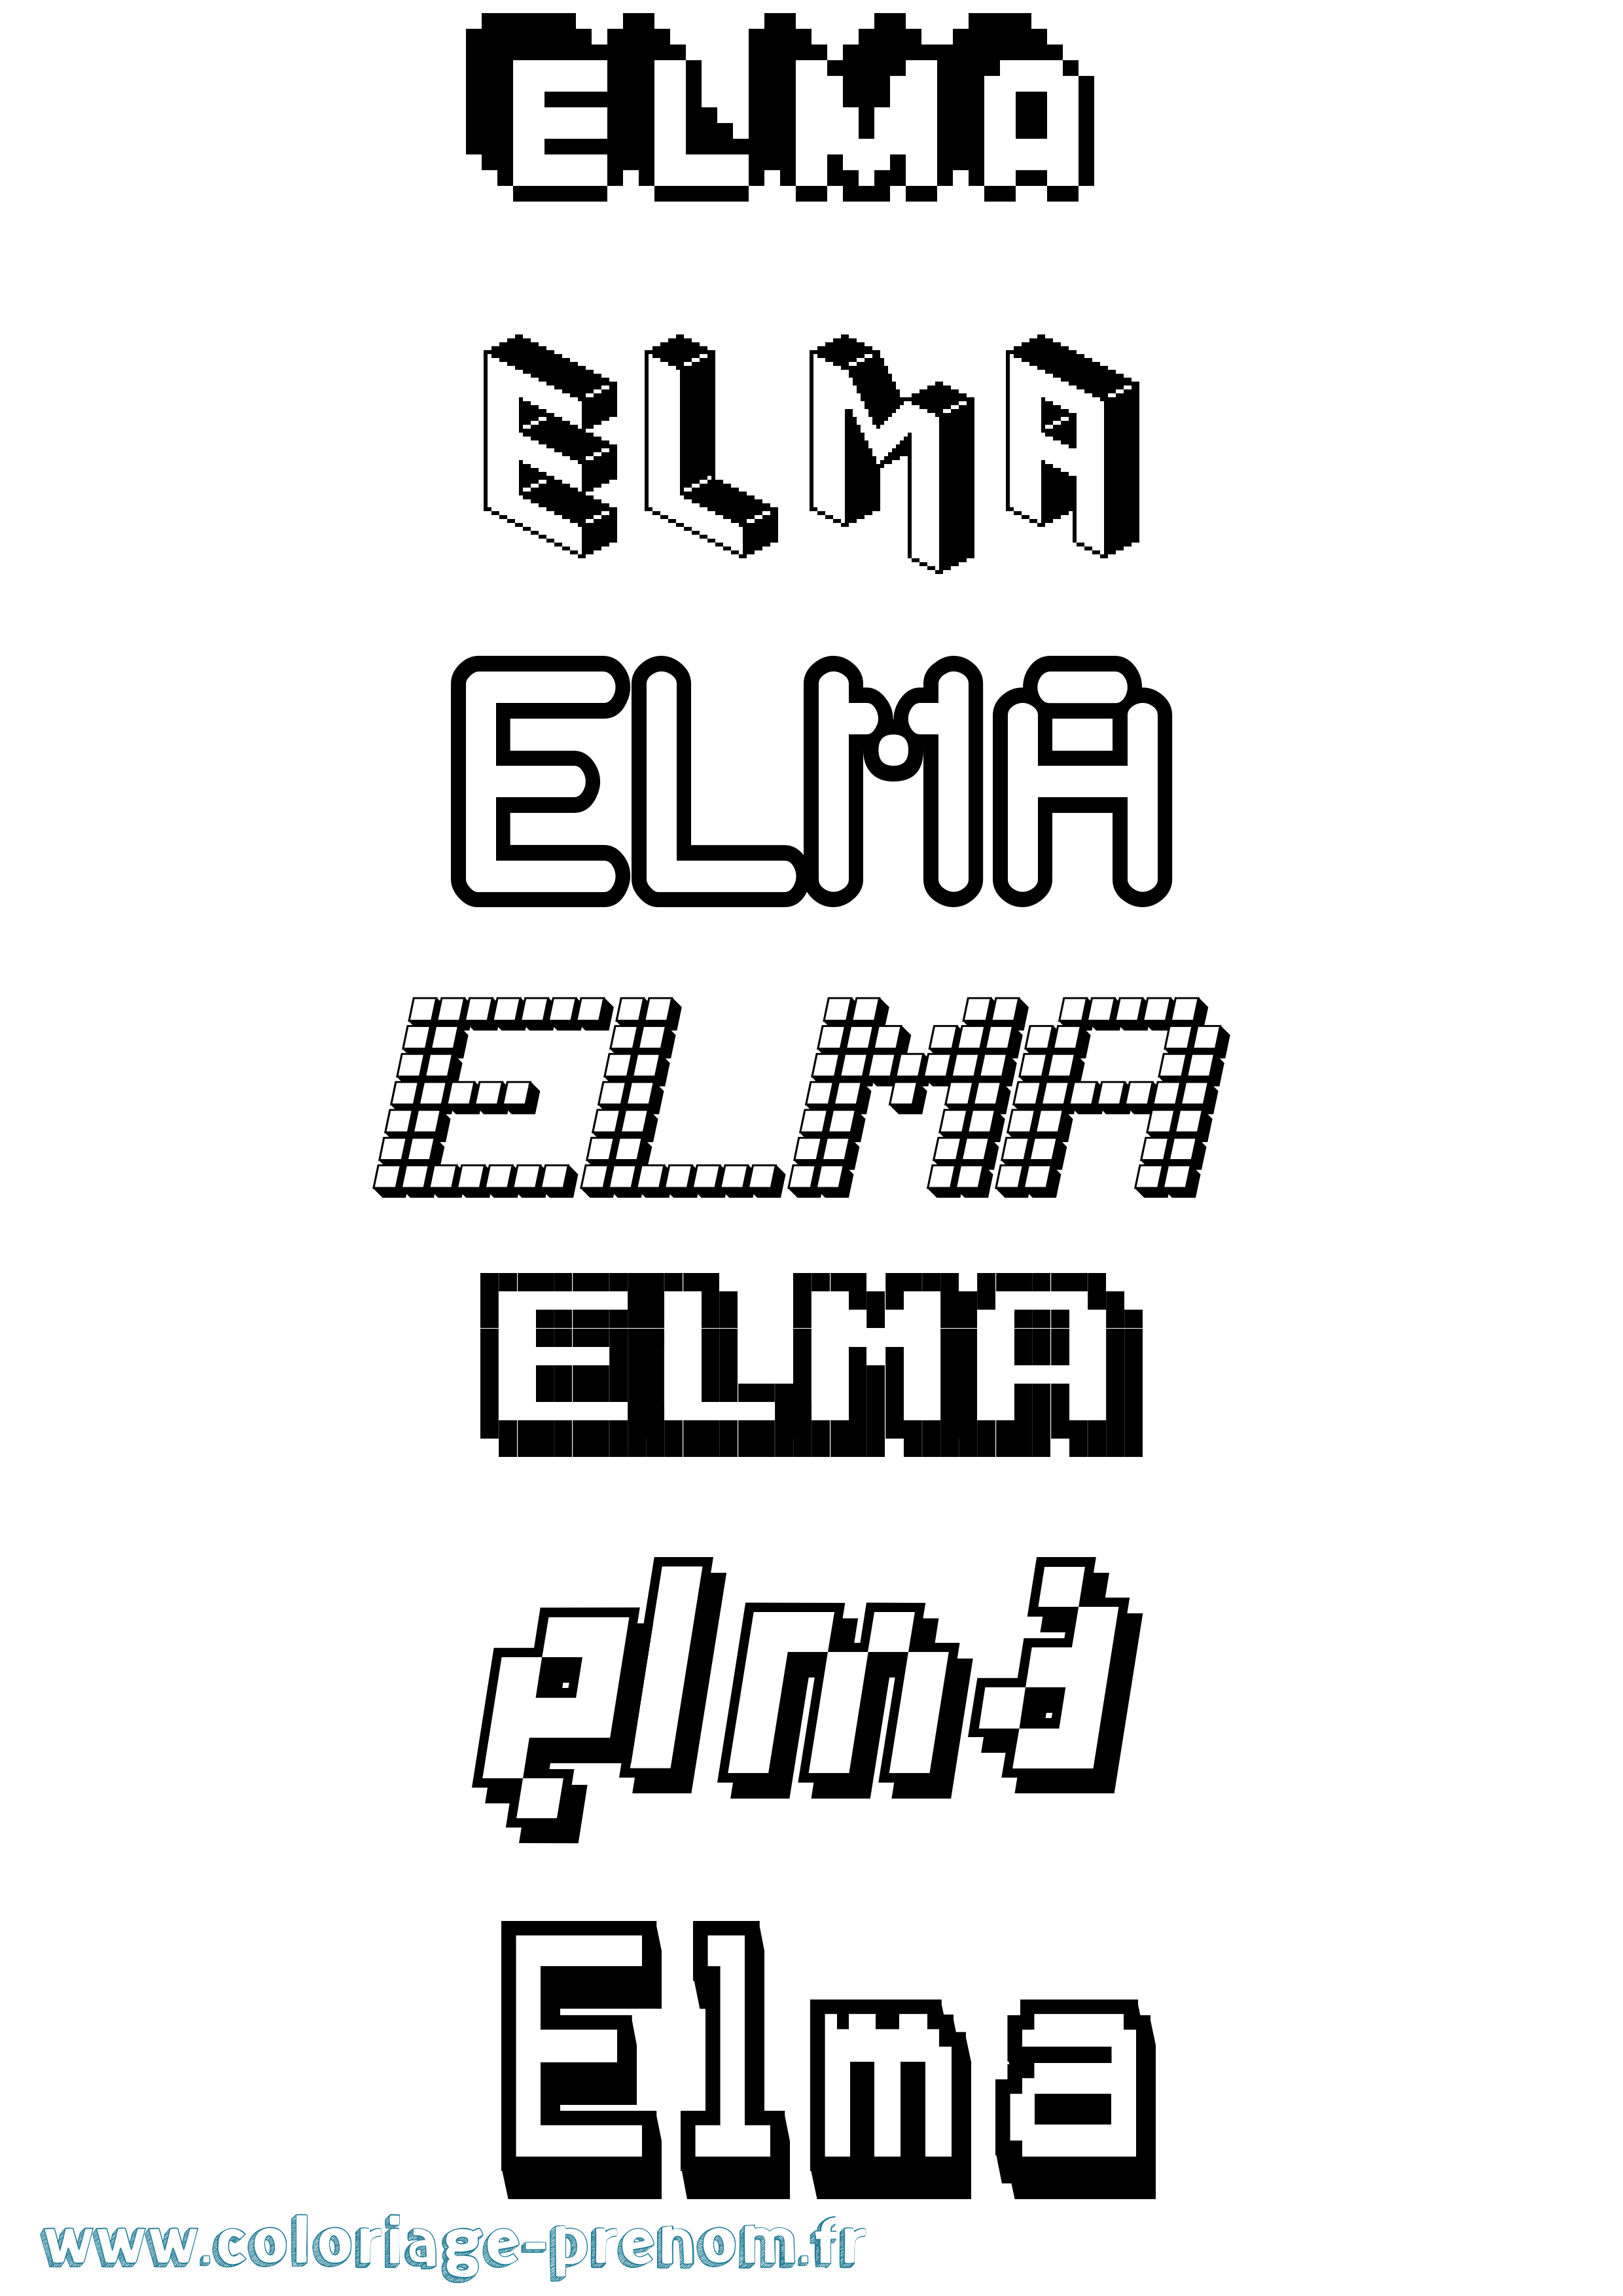 Coloriage prénom Elma Pixel